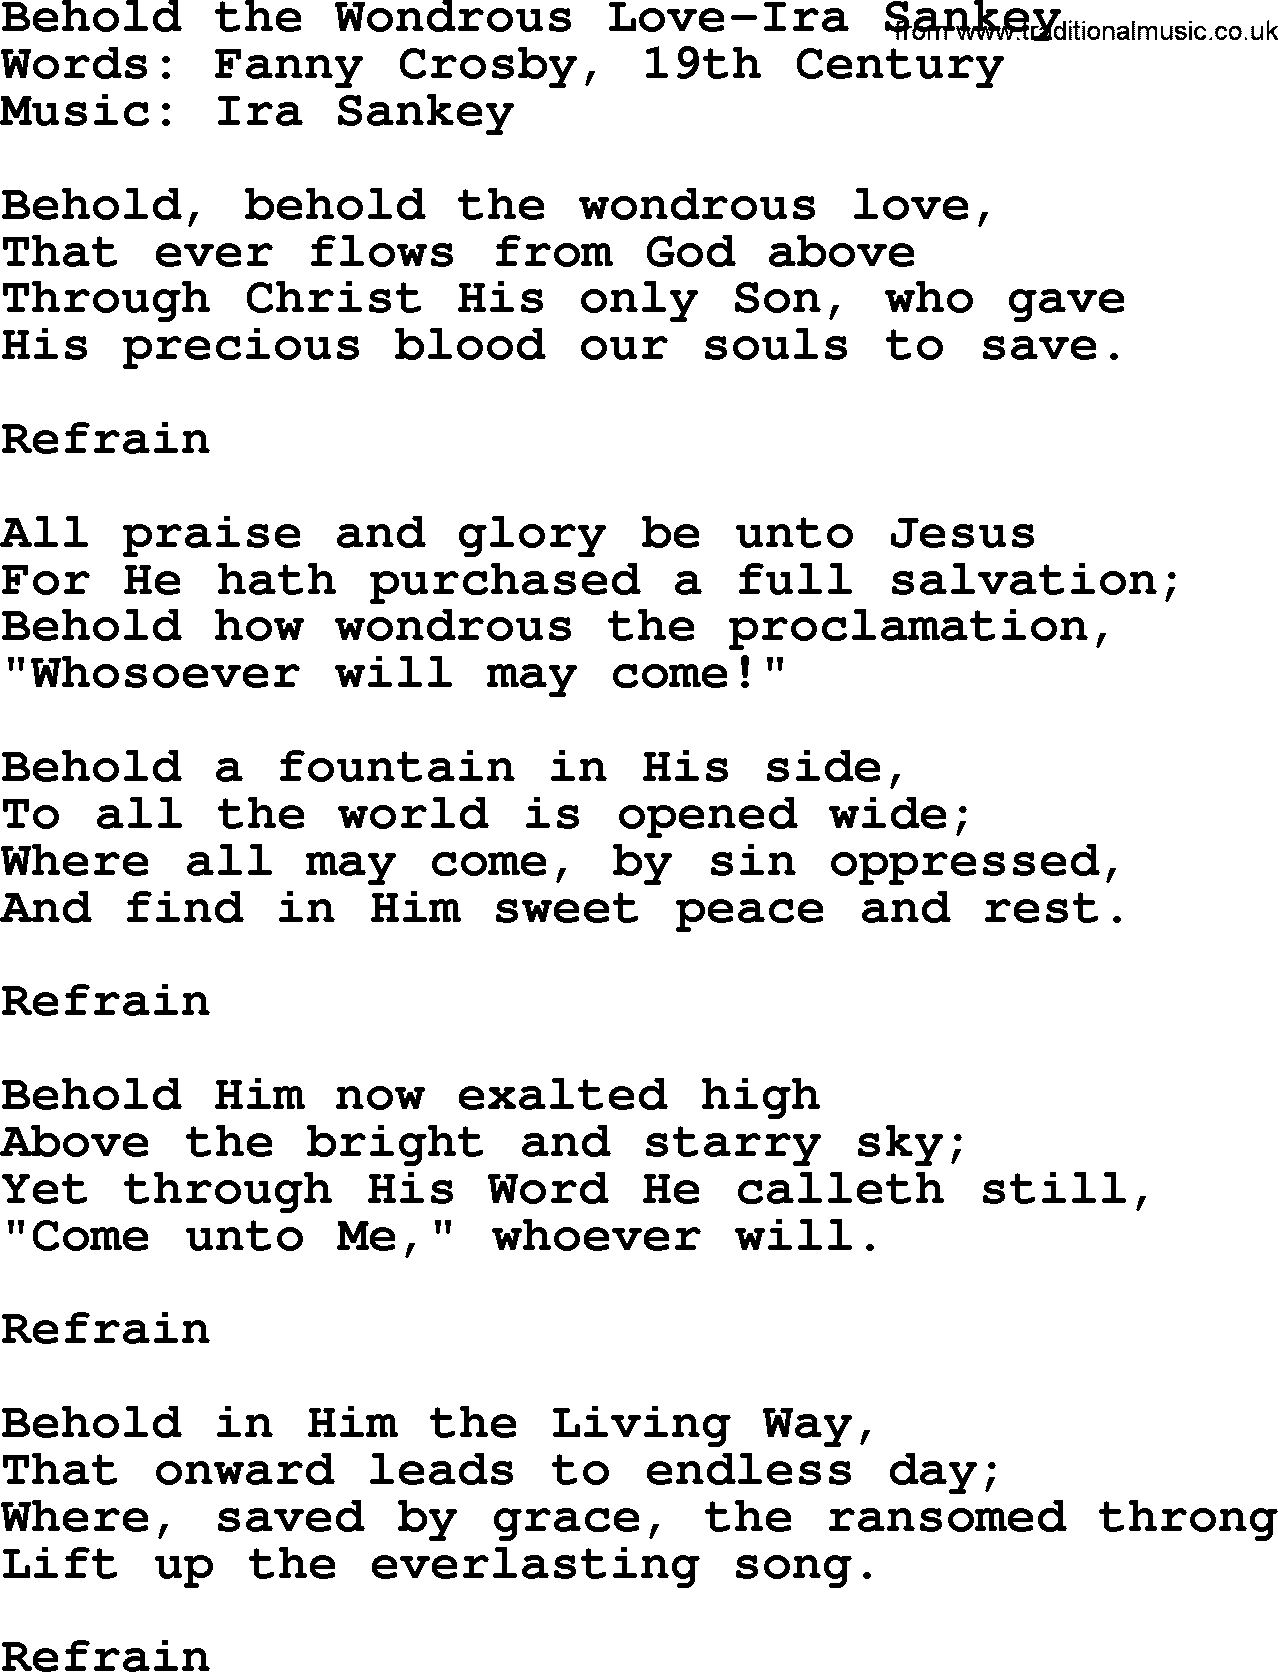 Ira Sankey hymn: Behold the Wondrous Love-Ira Sankey, lyrics